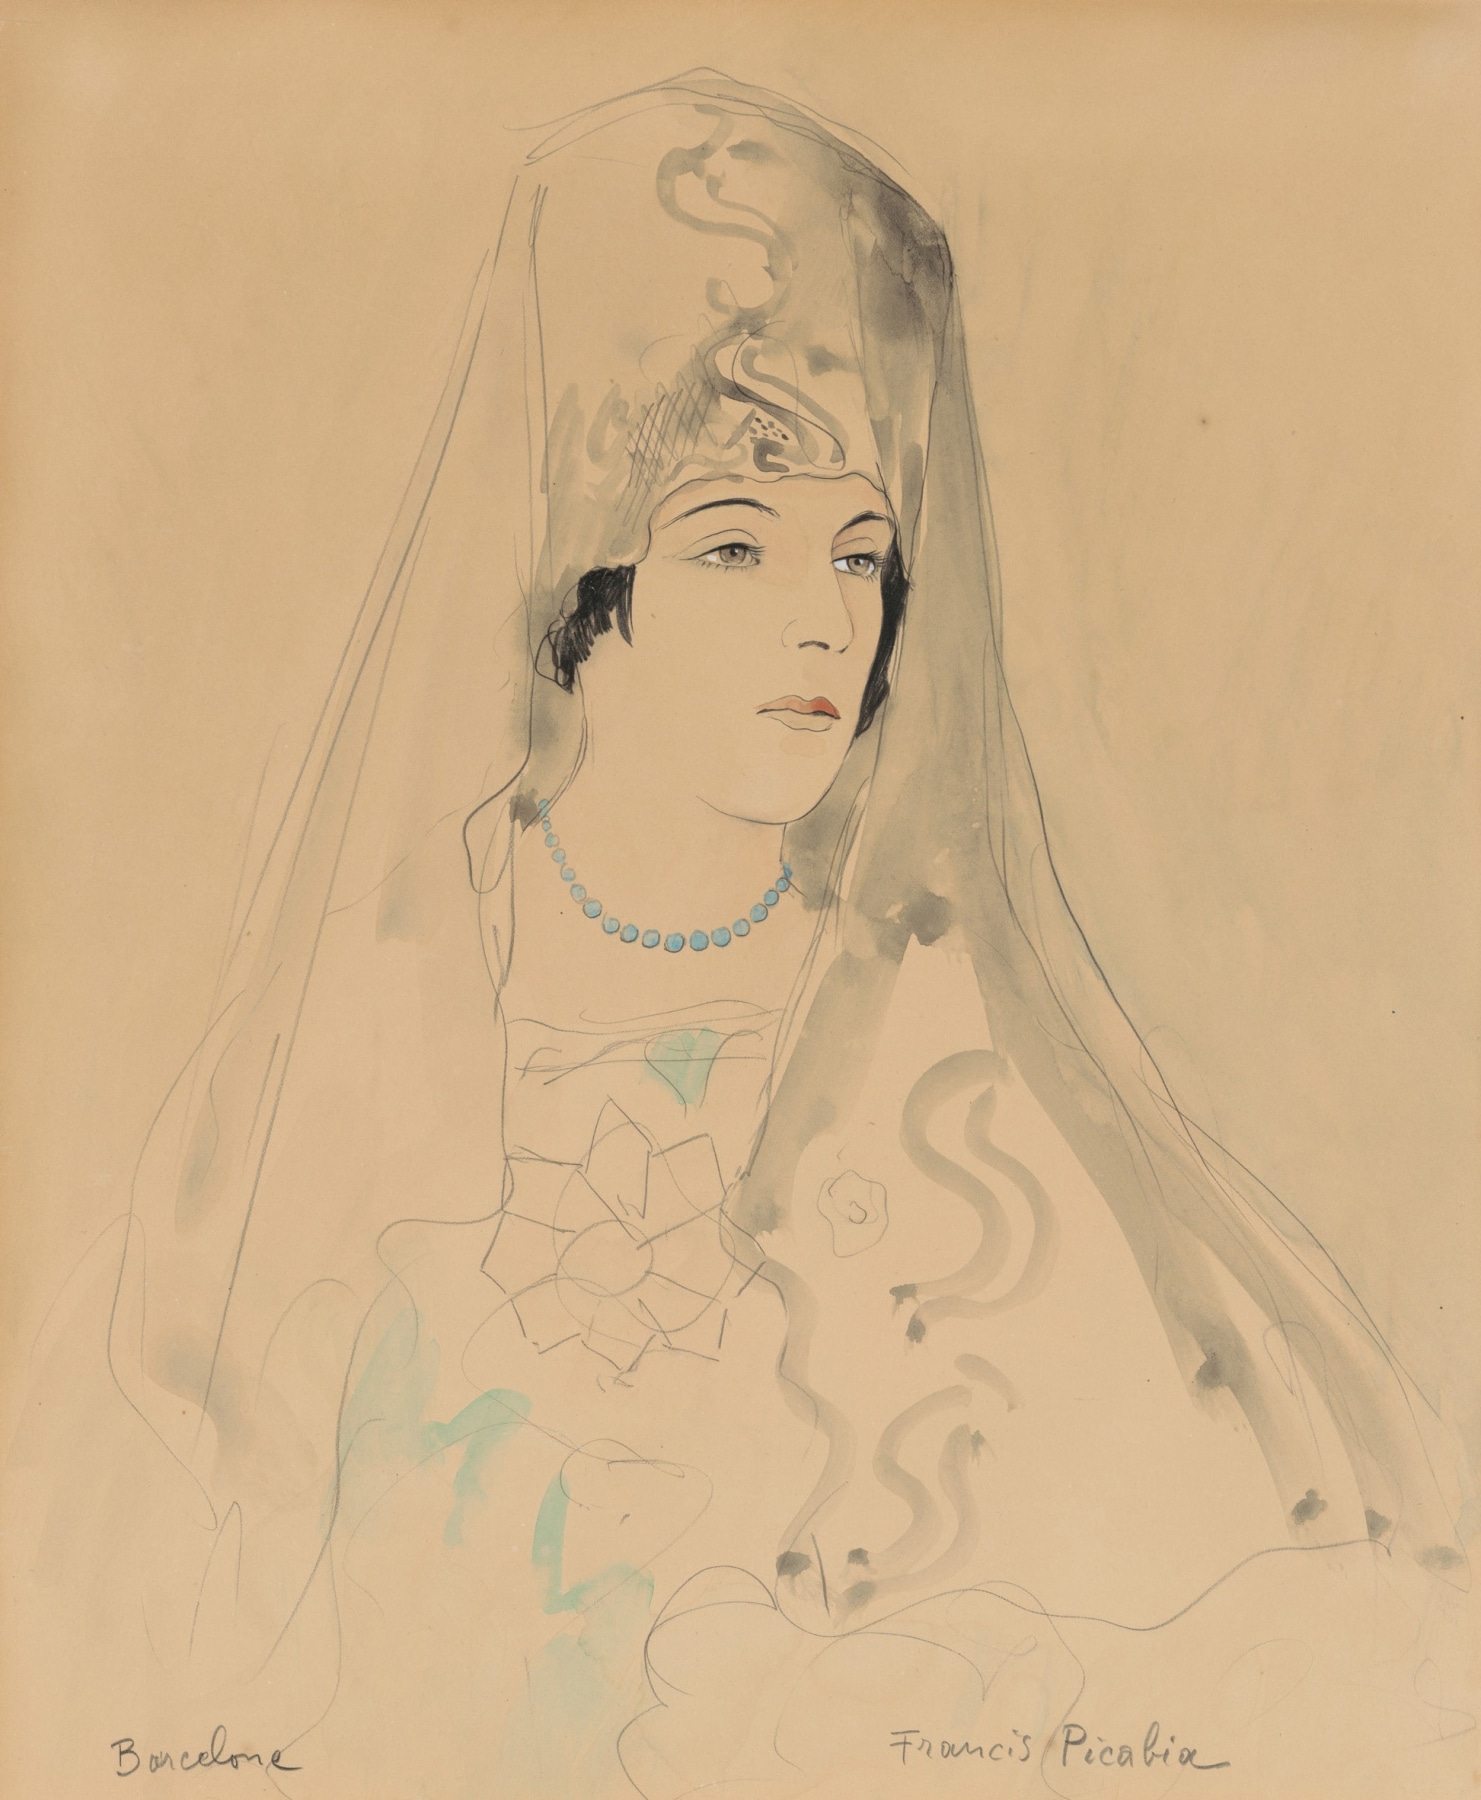 Francis Picabia

&amp;ldquo;Espagnole&amp;rdquo;, ca. 1924&amp;ndash;1927

Watercolour, ink, pencil on paper

15 1/2 x 12 1/2 inches

39.5 x 32 cm

PIZ 116